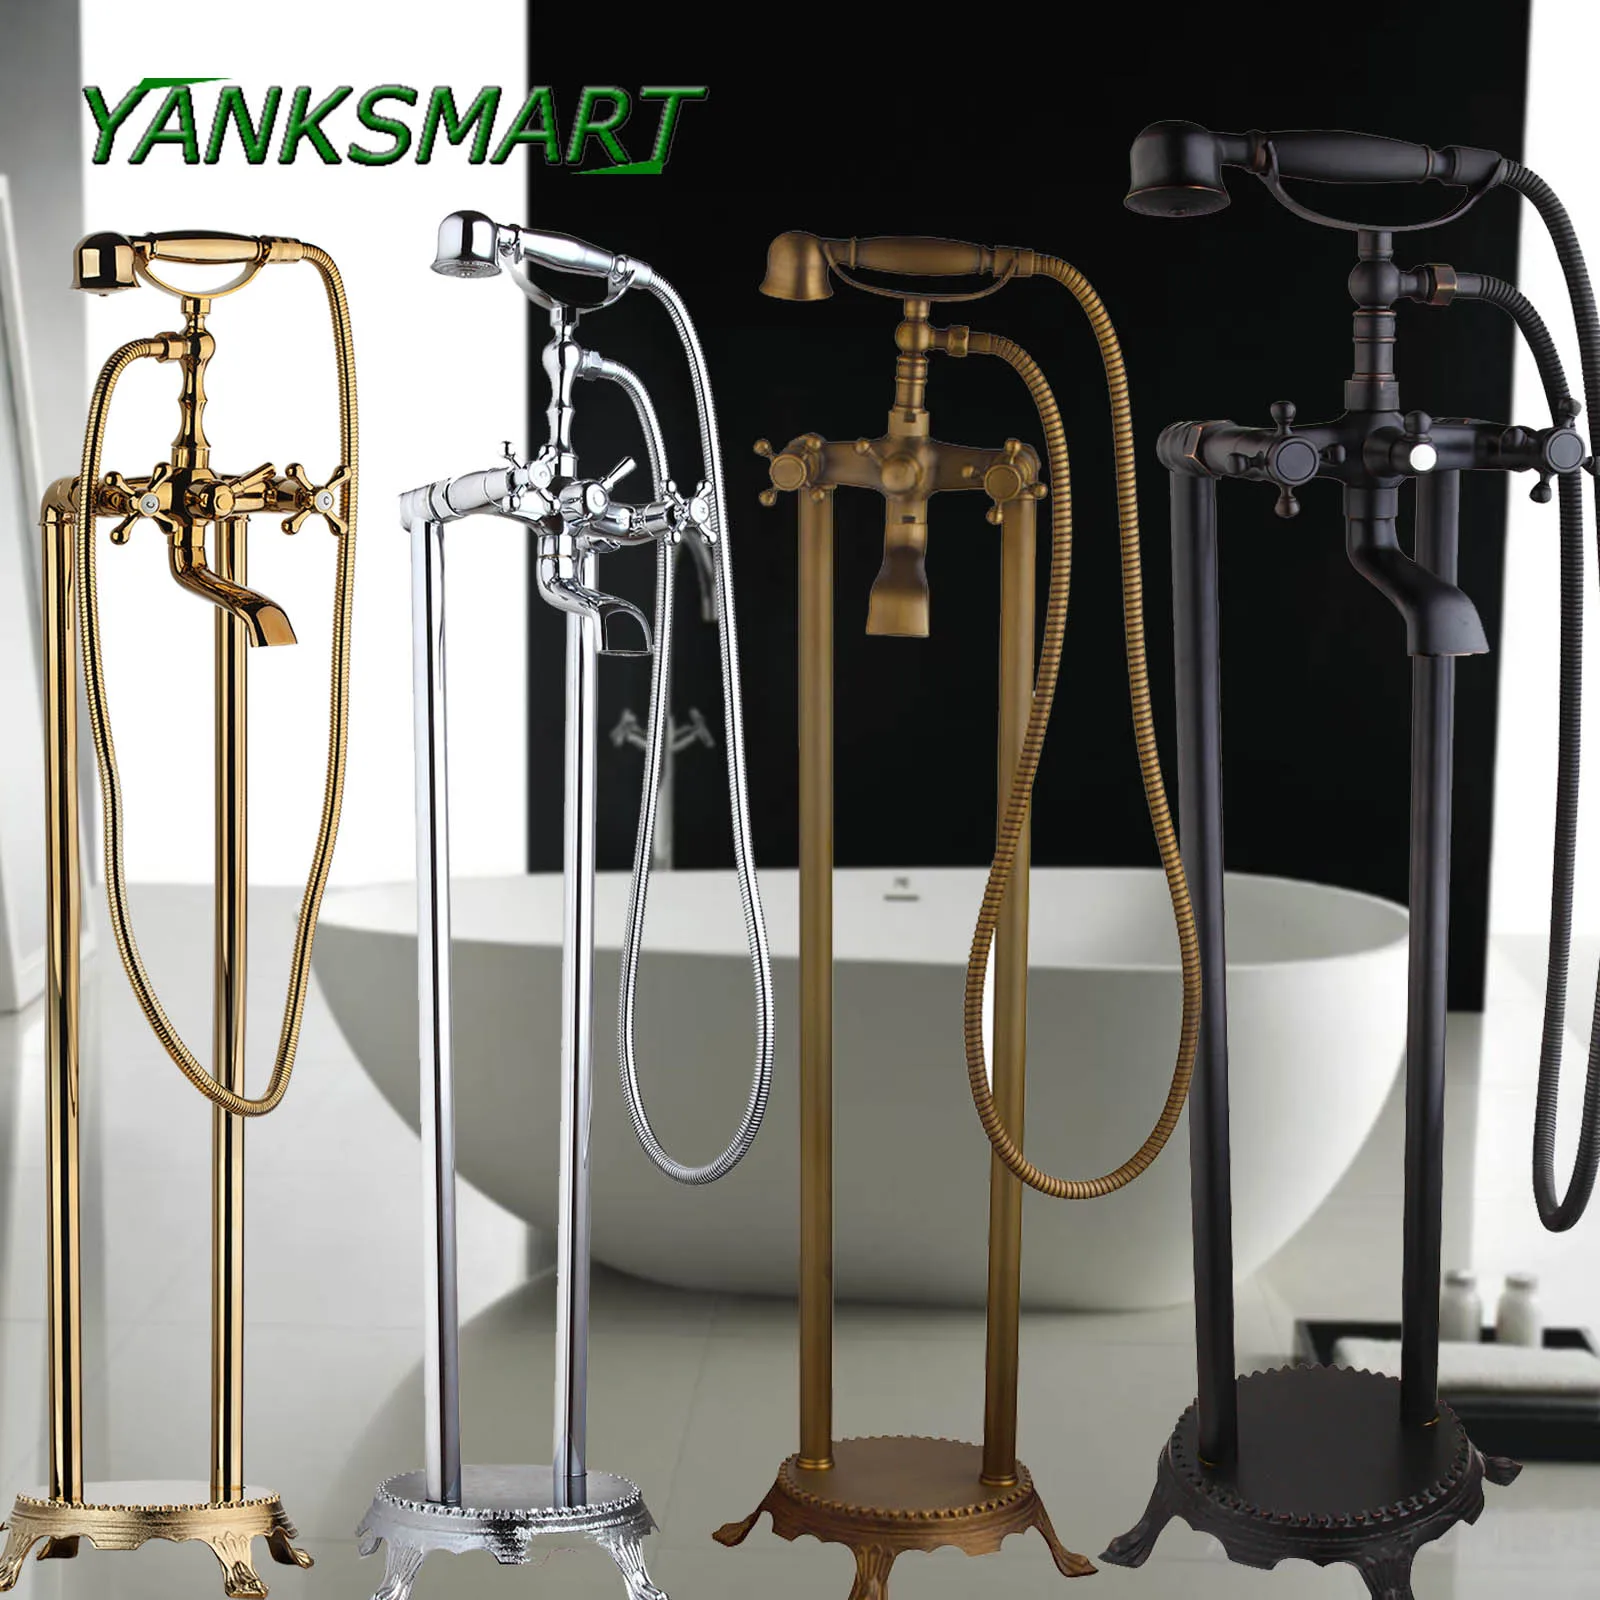 

YANKSMART Bathtub Floor Stand Faucet Mixer Dual Hnadle 360 Rotation Waterfall Spout Bath Tub Faucet with Brass Handshower